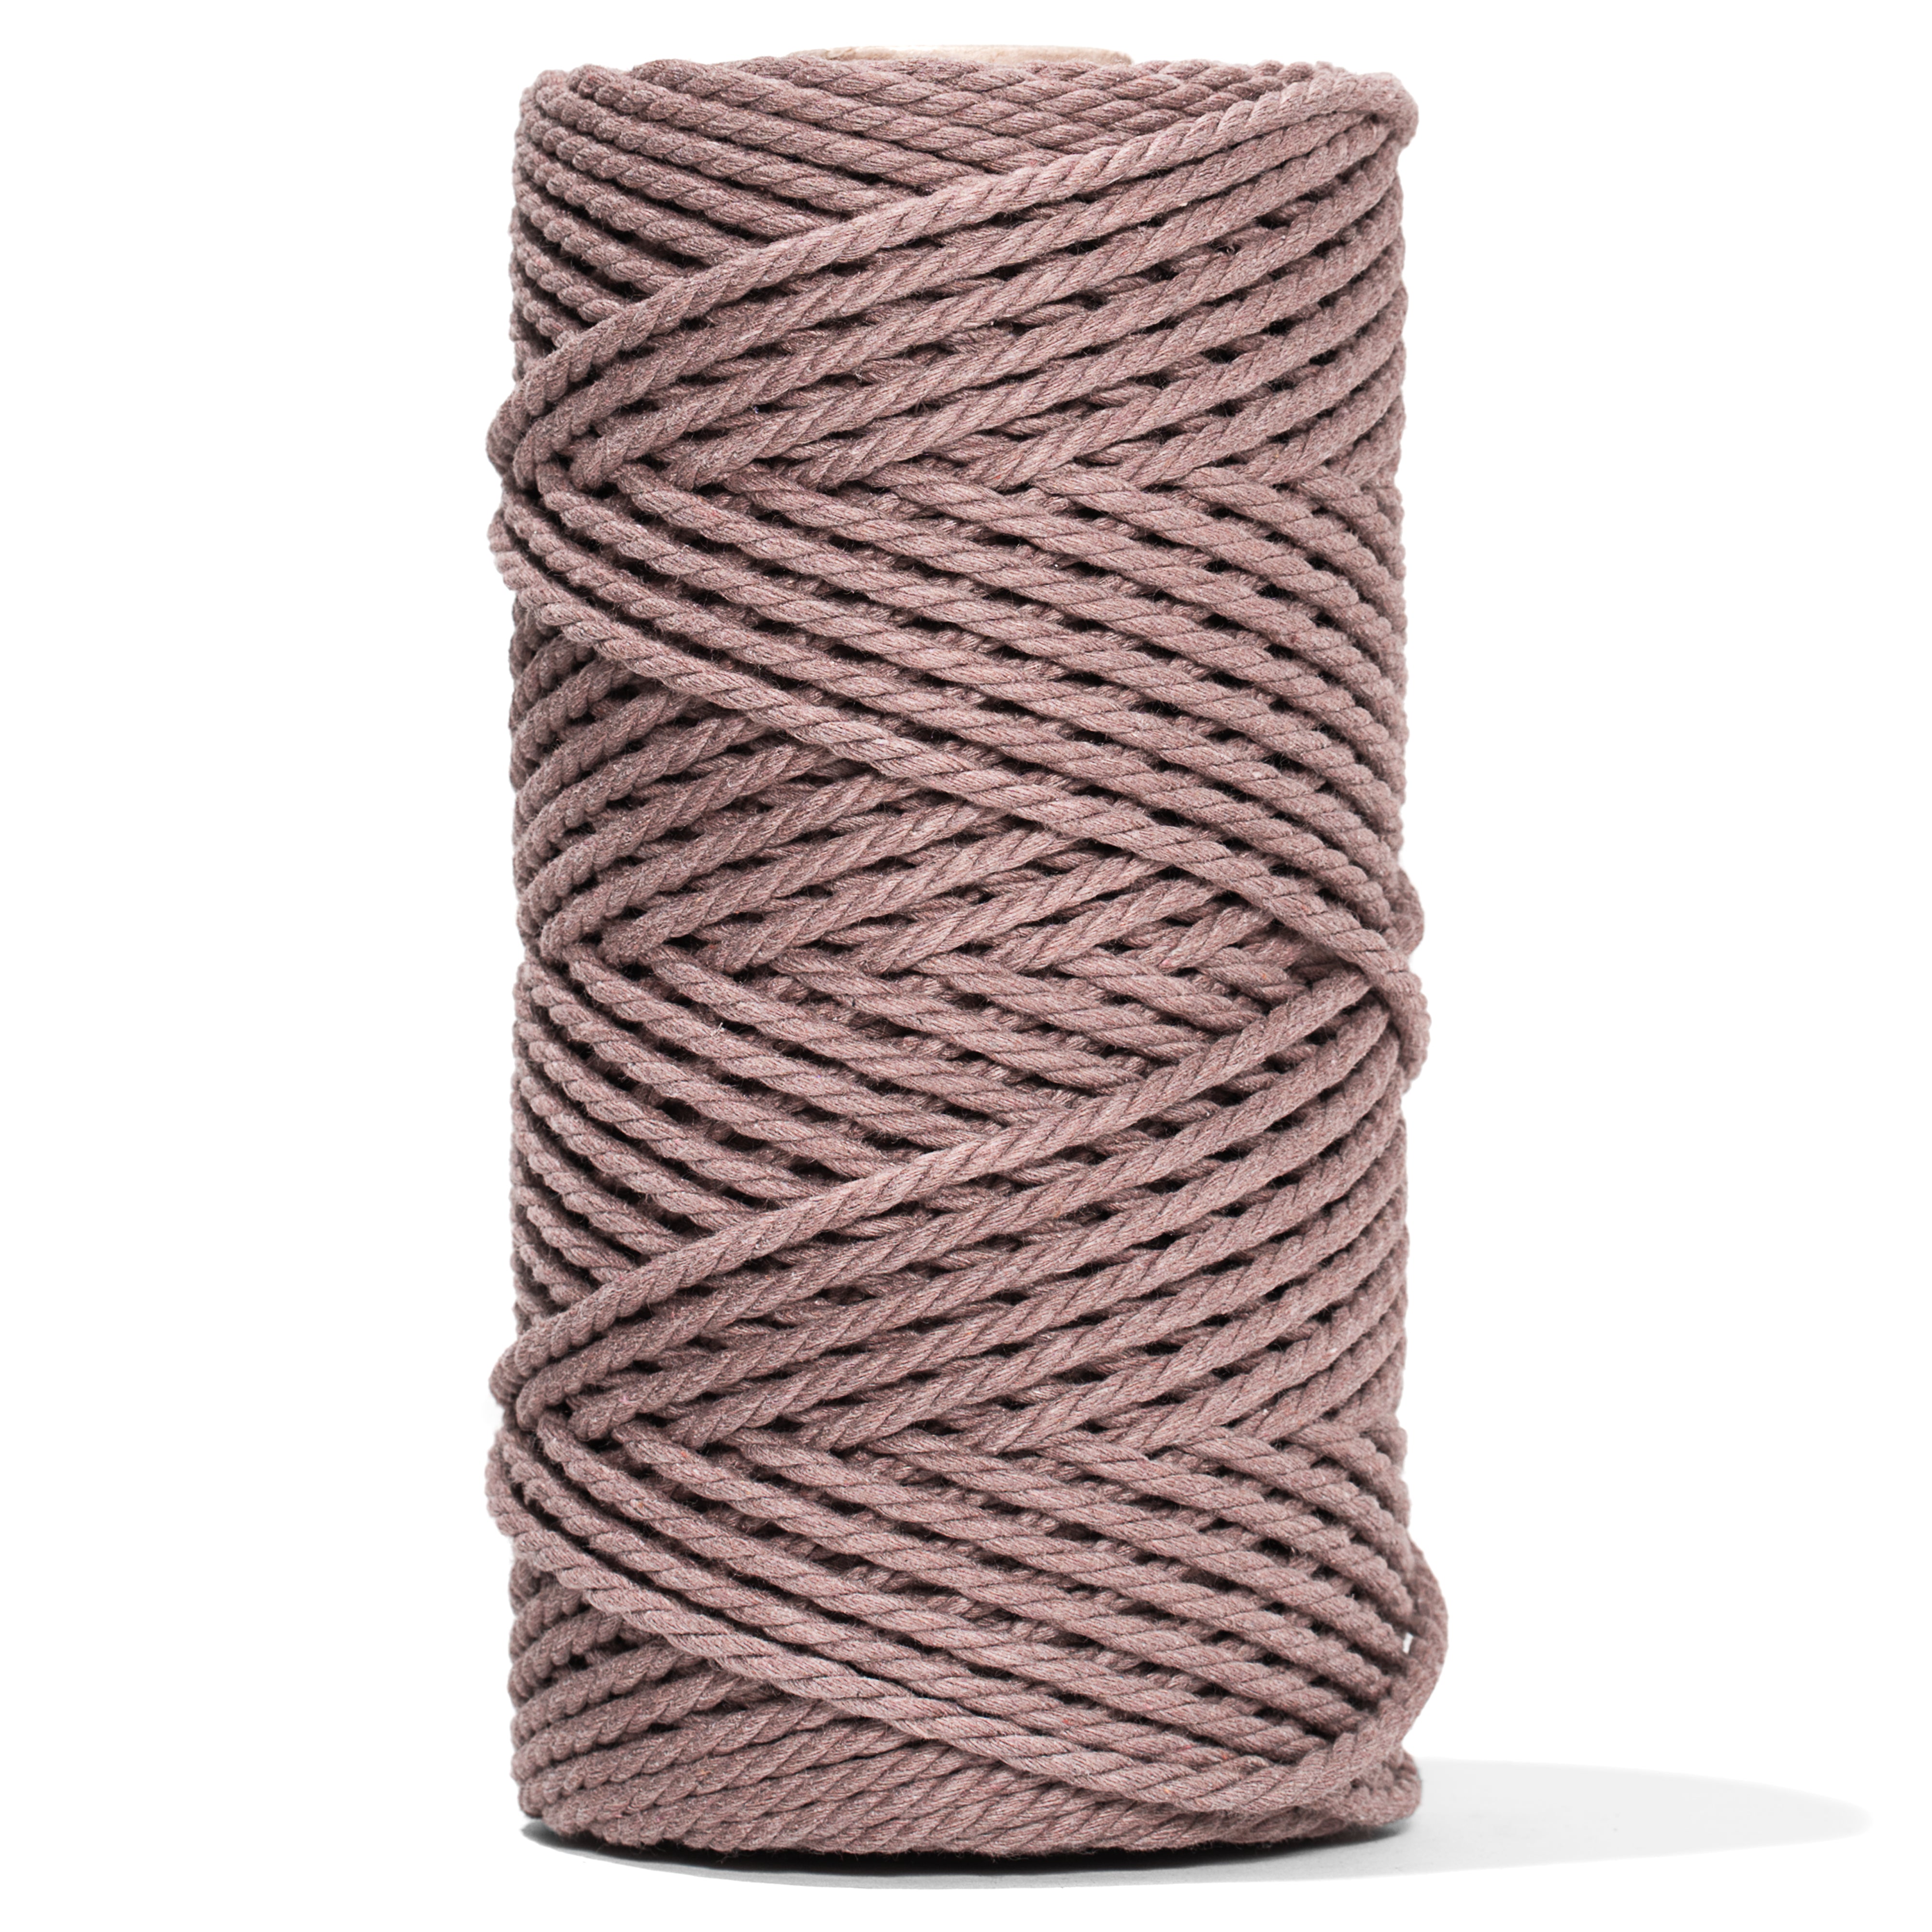 8mm Braided cord made in Spain | Macrame | 100% cotton original organic rope